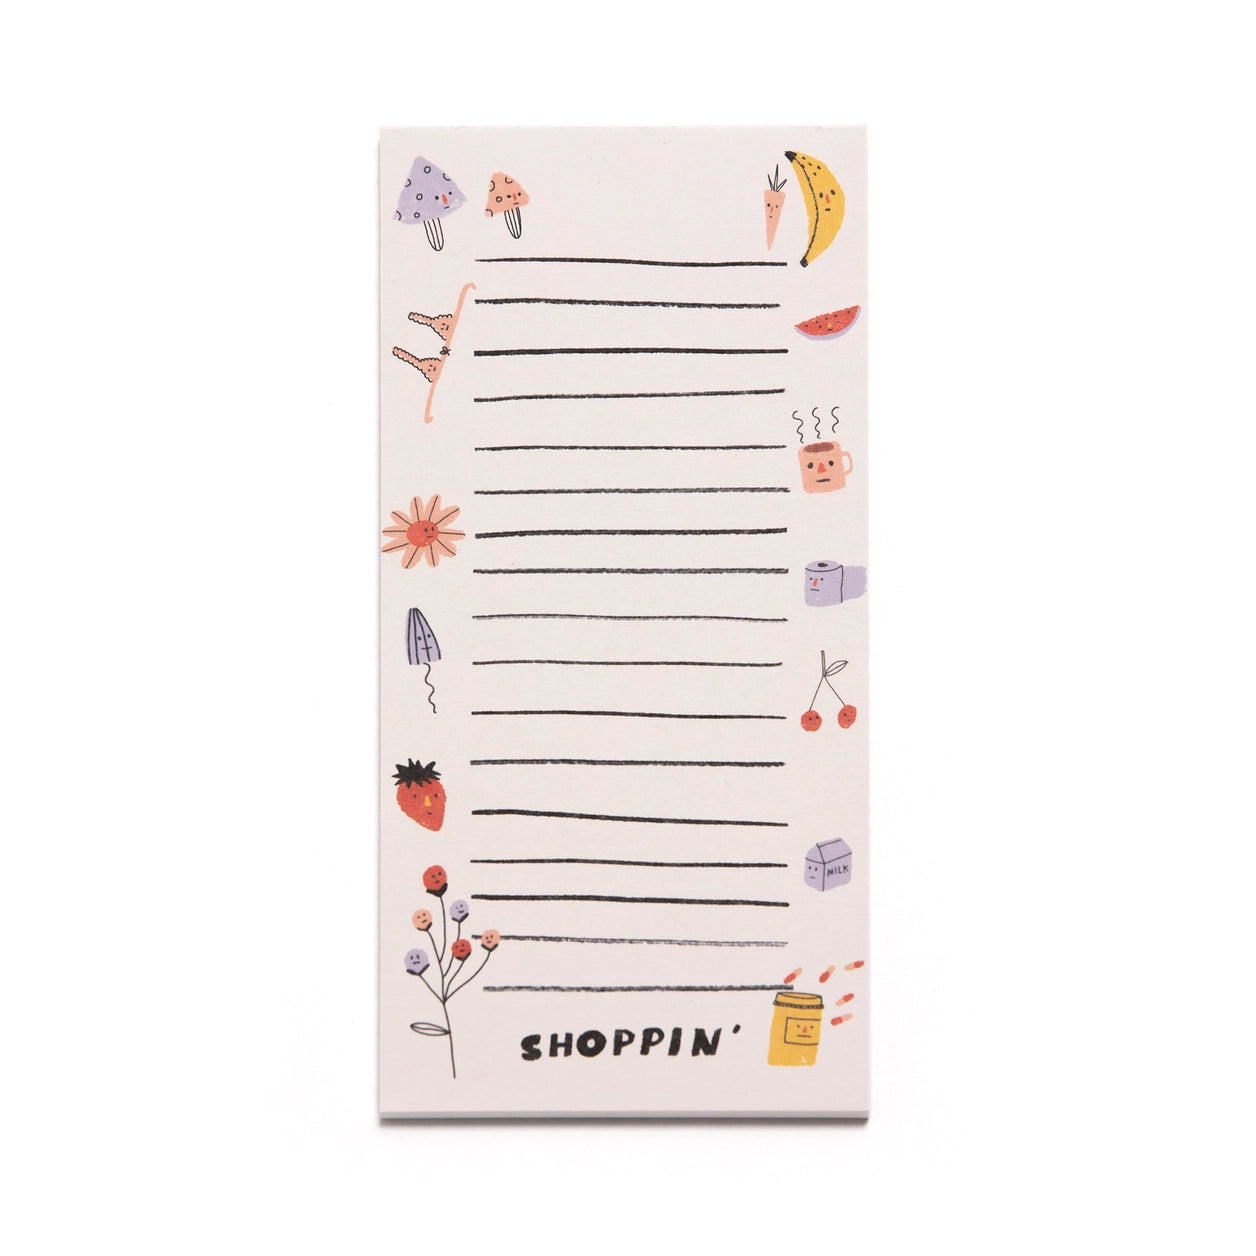 Shoppin' - Market Note Pad - Proper